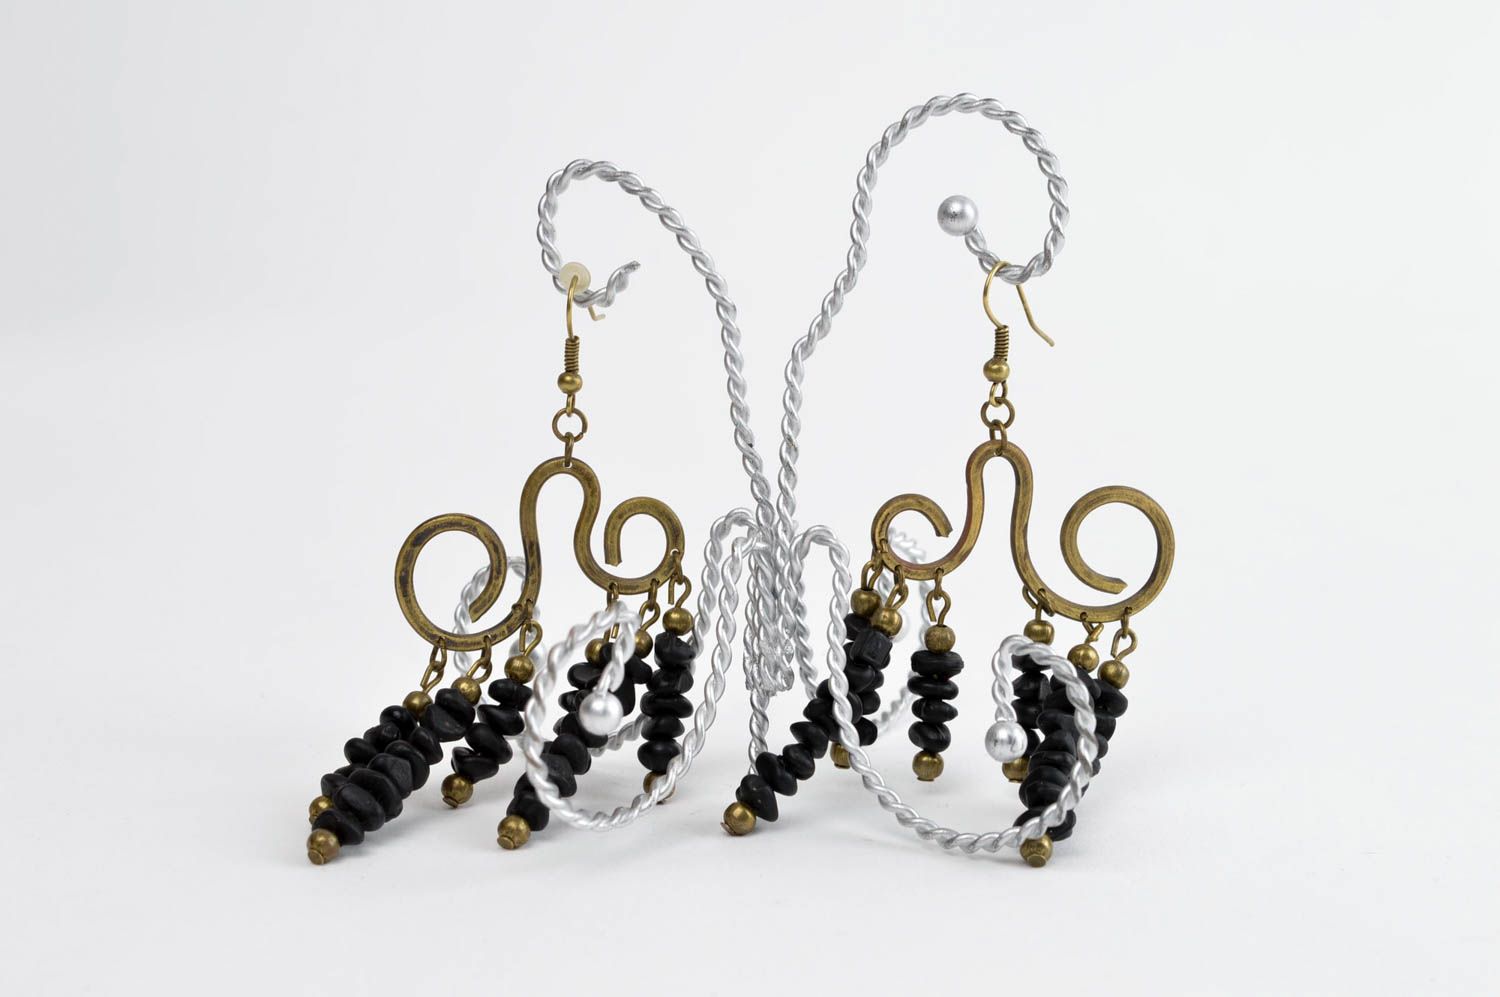 Stylish handmade metal earrings costume jewelry fashion accessories small gifts photo 1